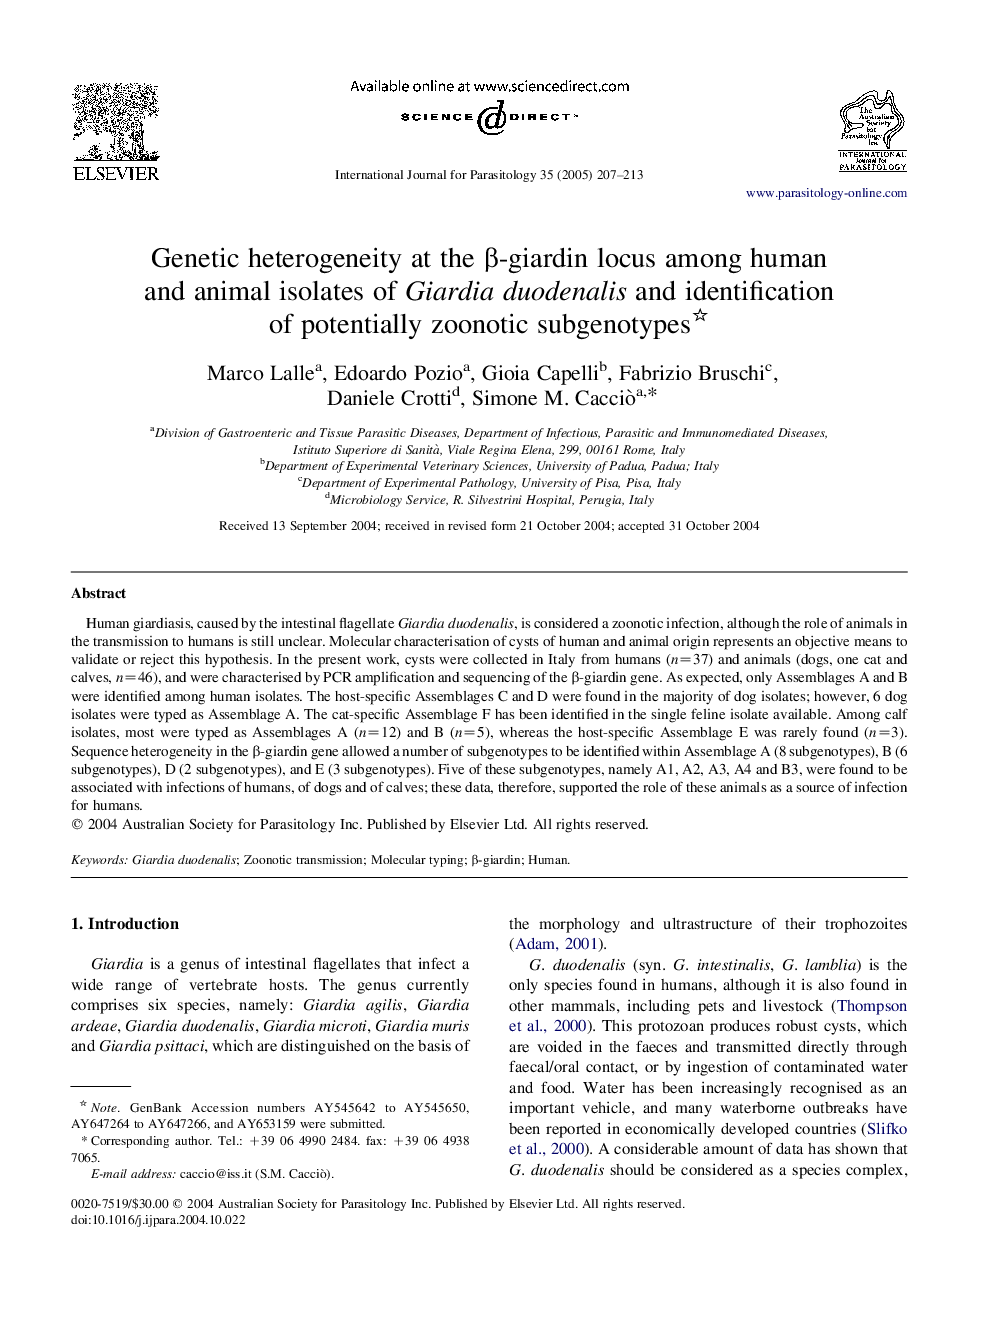 Genetic heterogeneity at the Î²-giardin locus among human and animal isolates of Giardiaduodenalis and identification of potentially zoonotic subgenotypes